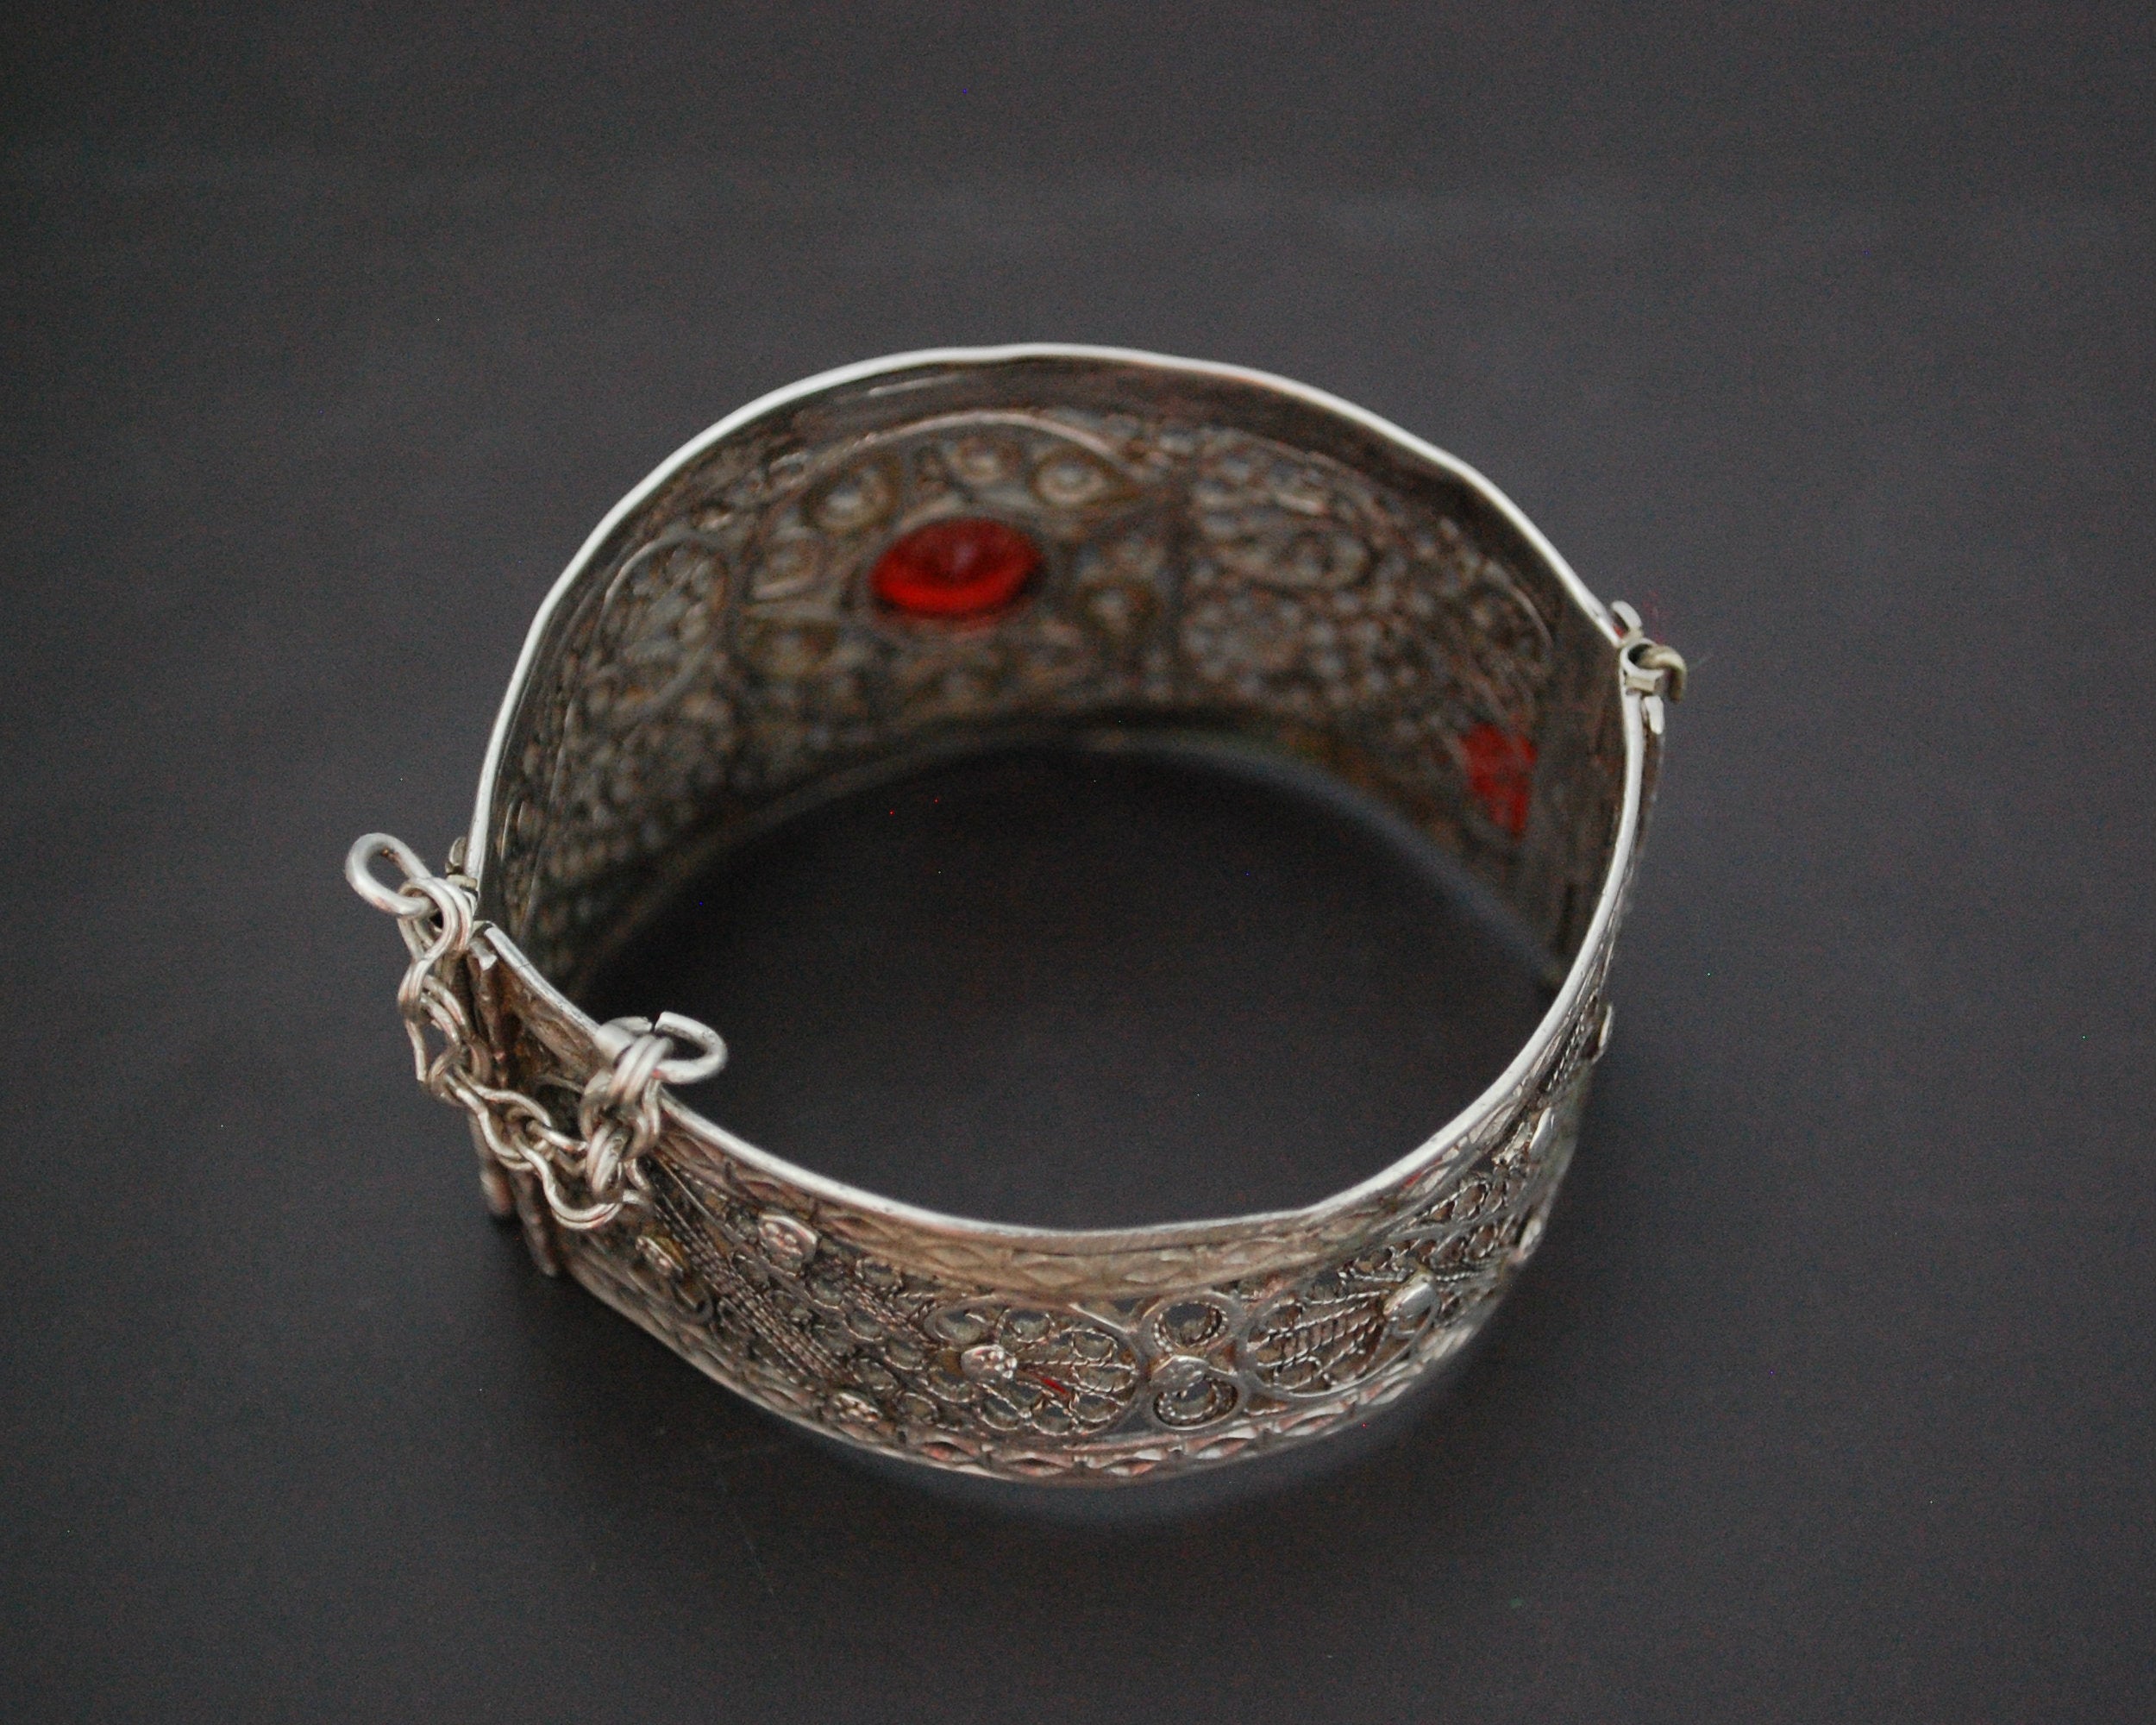 Afghani Filigree Bracelet with Red Glass